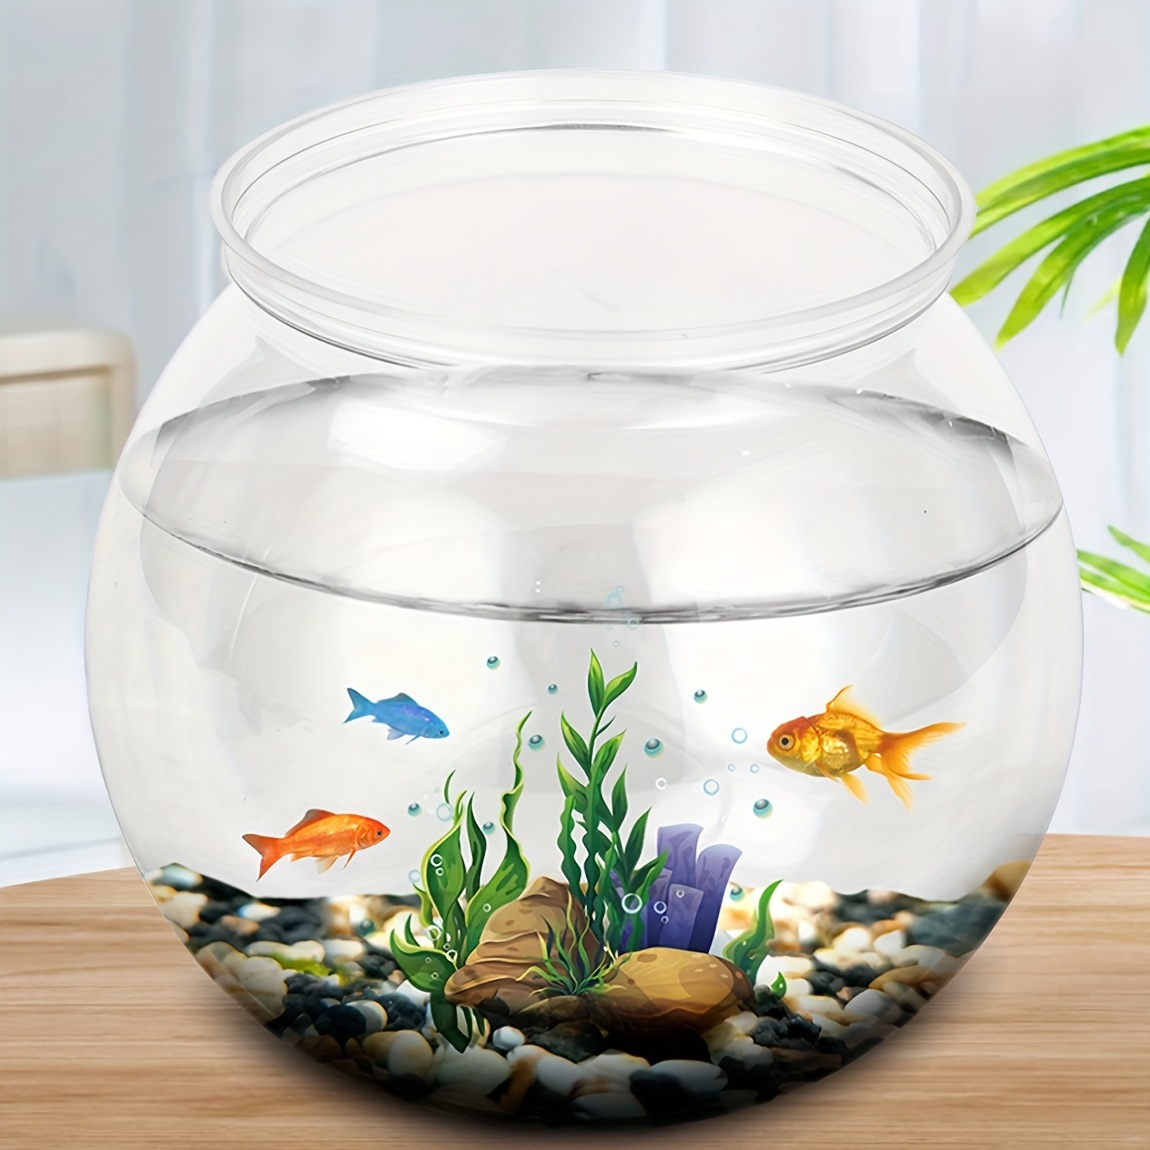 Generic Small Fish Tank Decor Fish Bowl Accessories Betta Glass Base  Aquarium